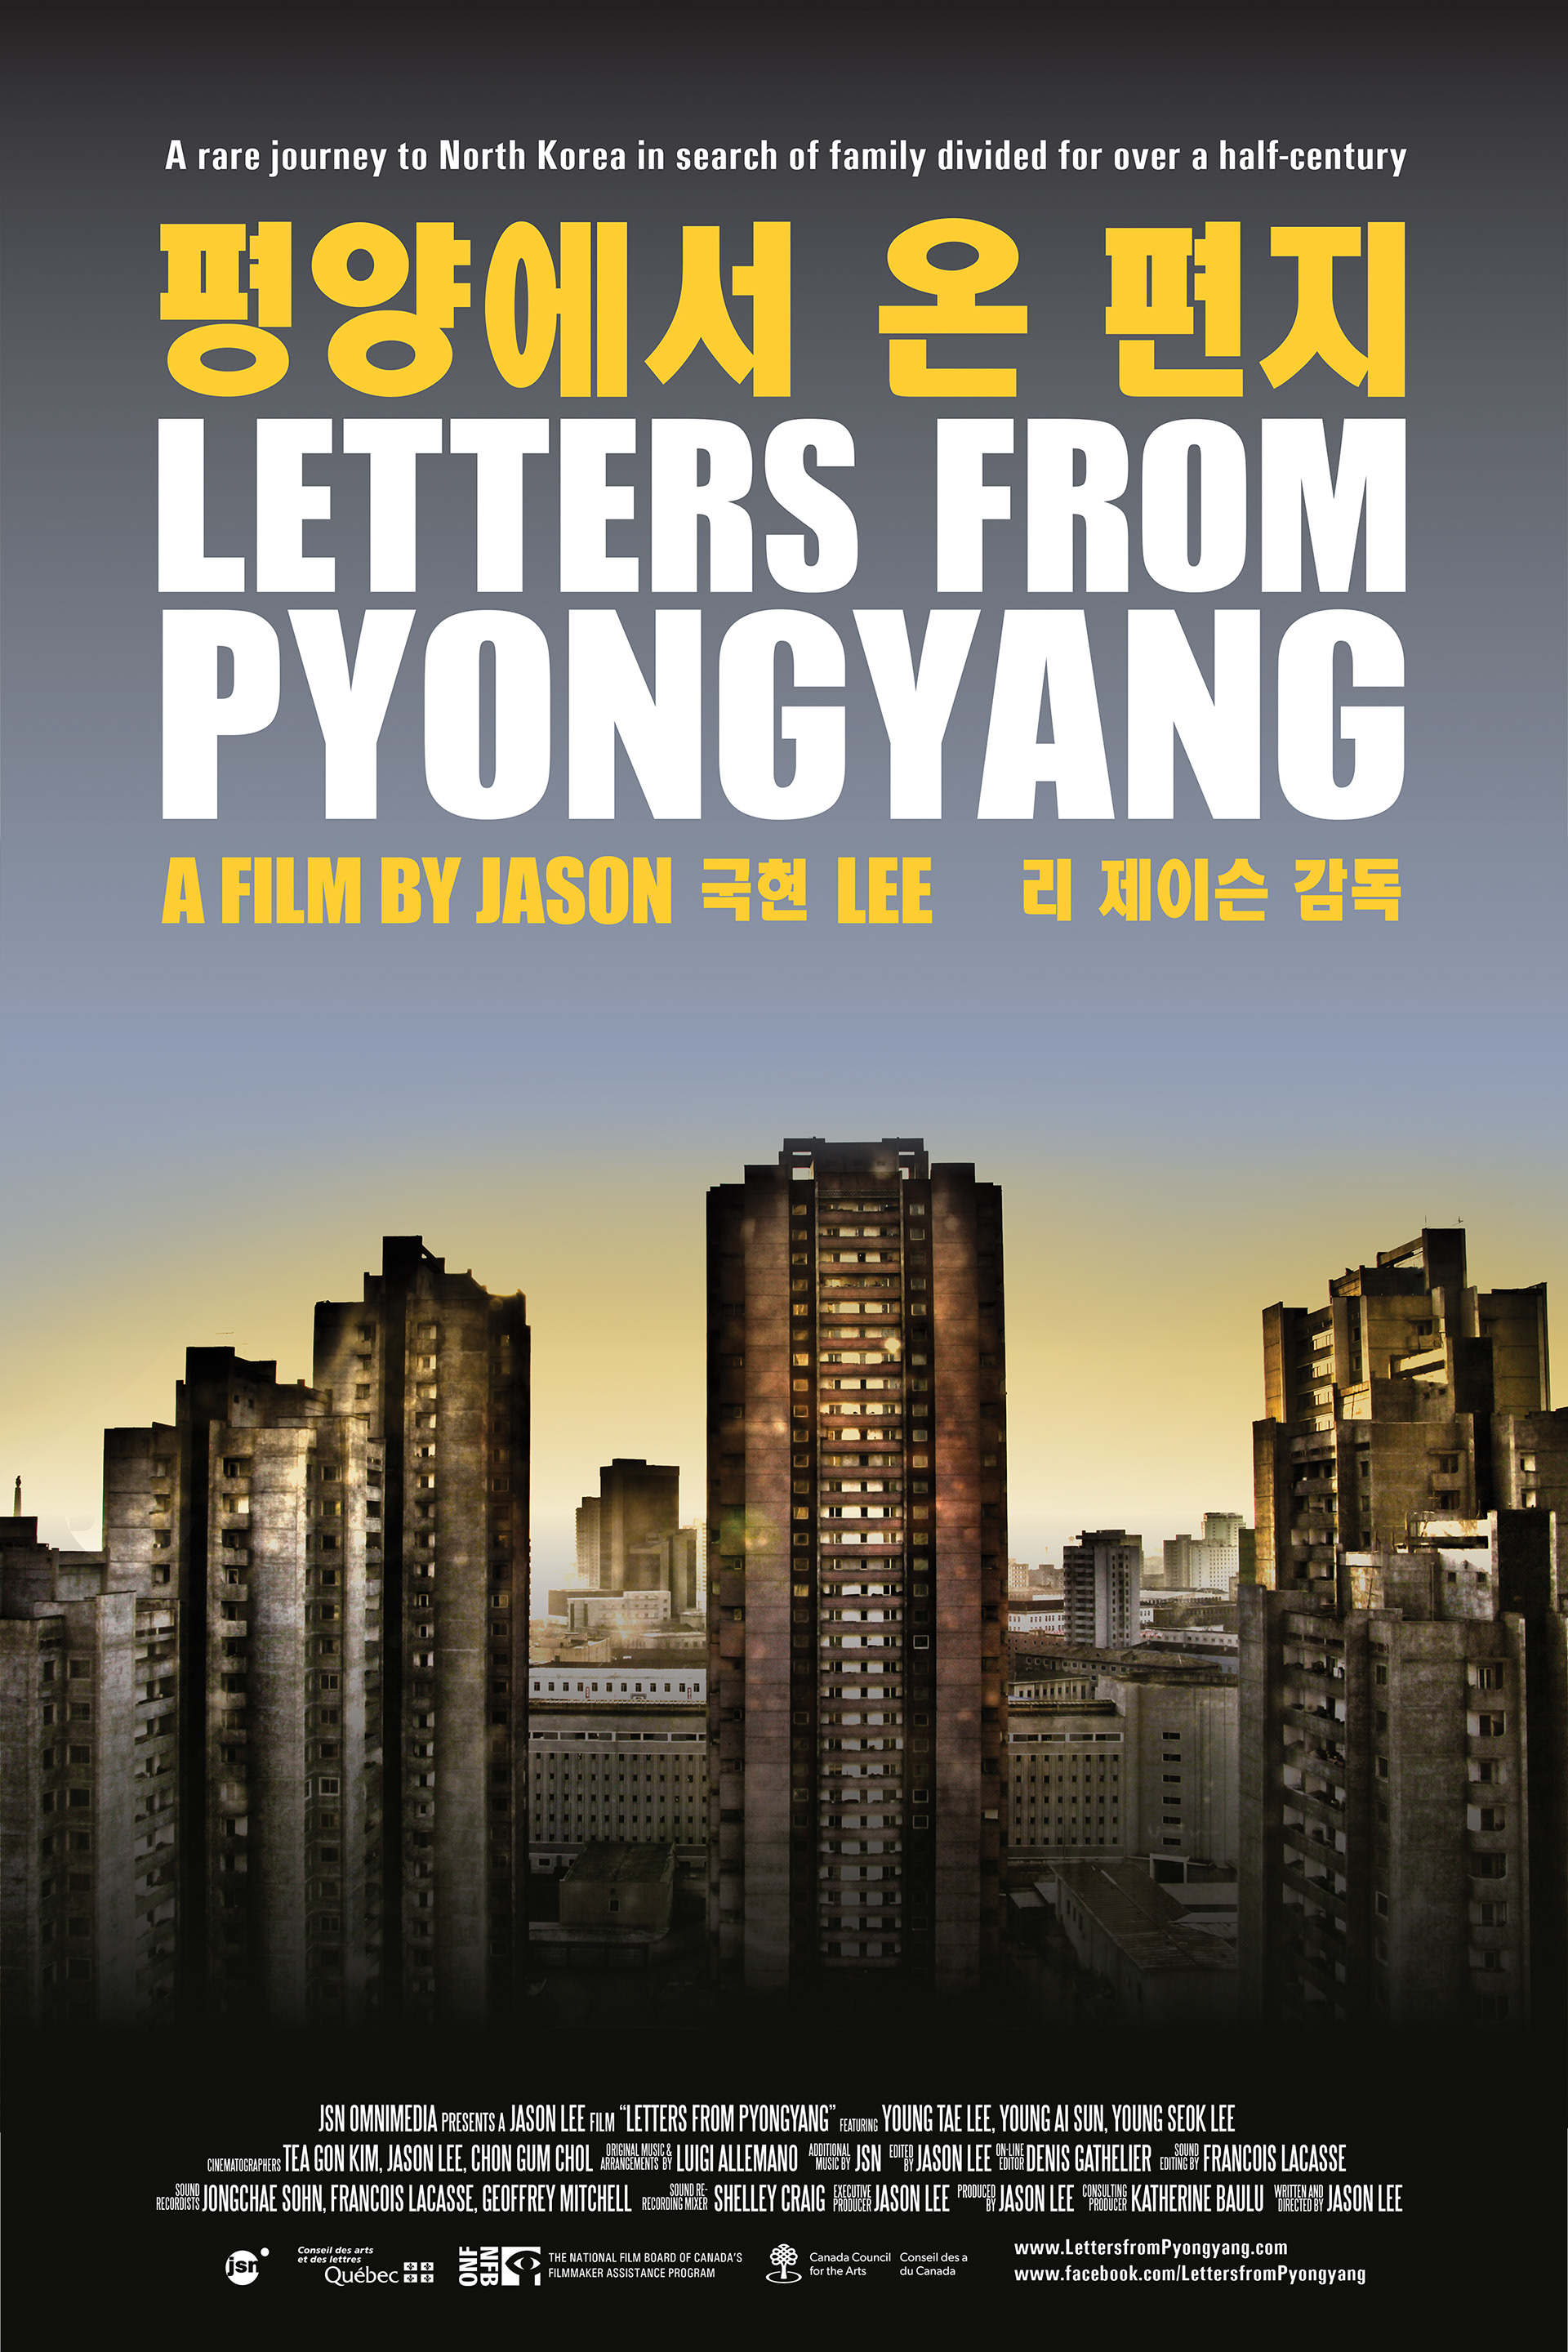 Jason Lee - Award Winning Documentary Film